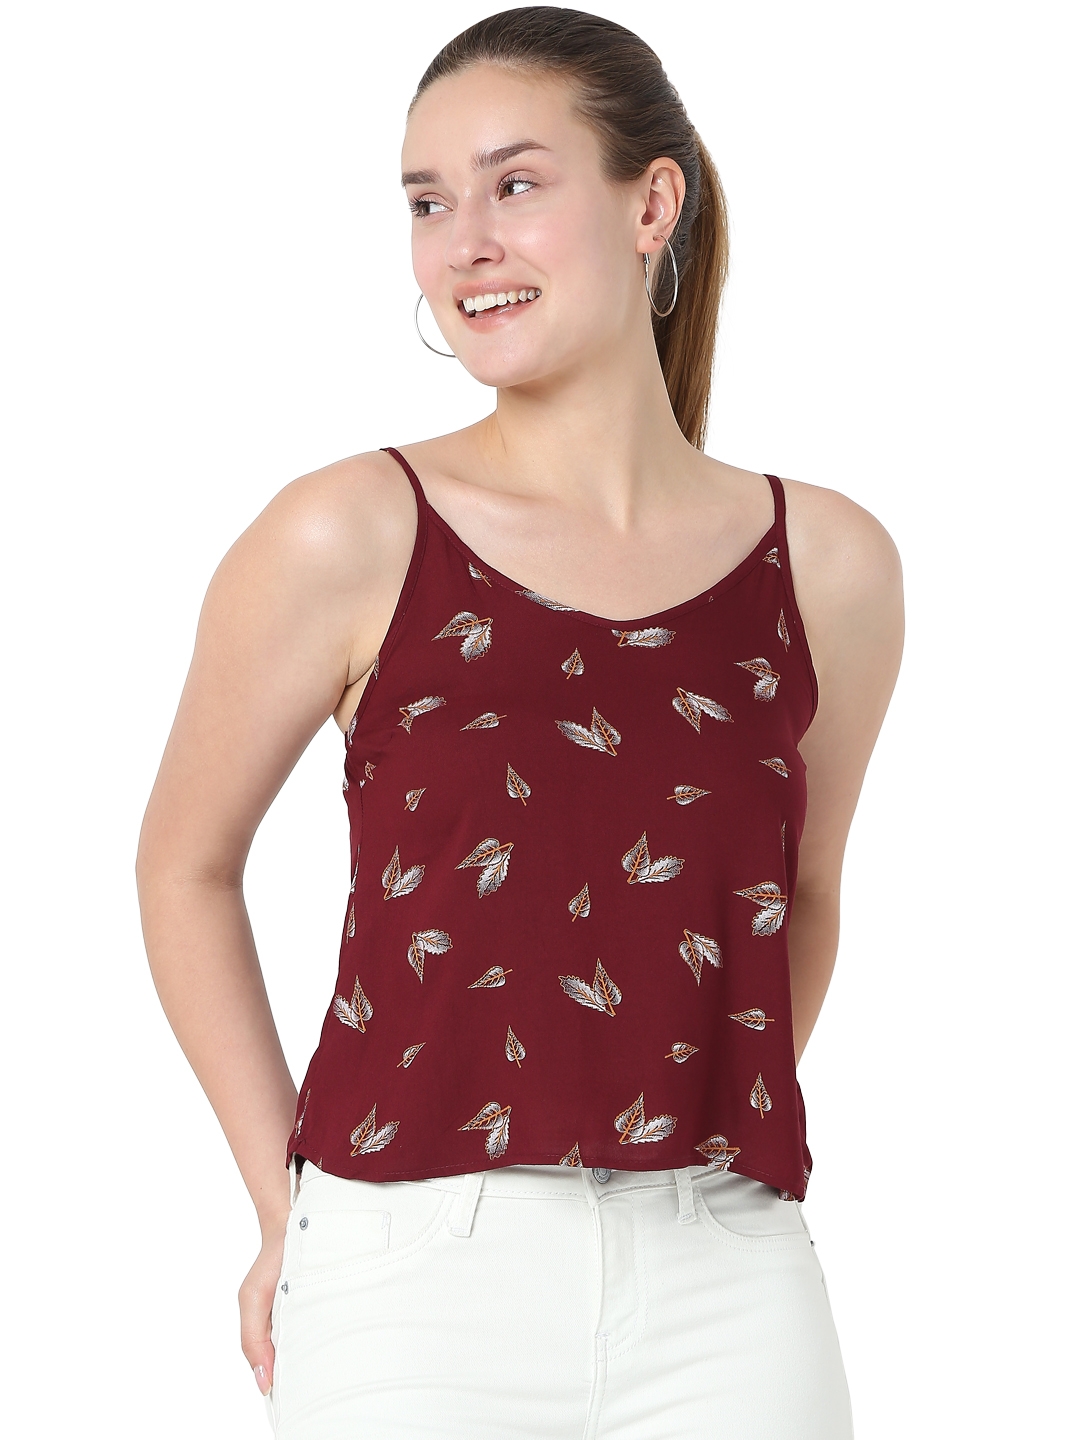 Smarty Pants | Smarty Pants women's cotton maroon color floral print tank top. 